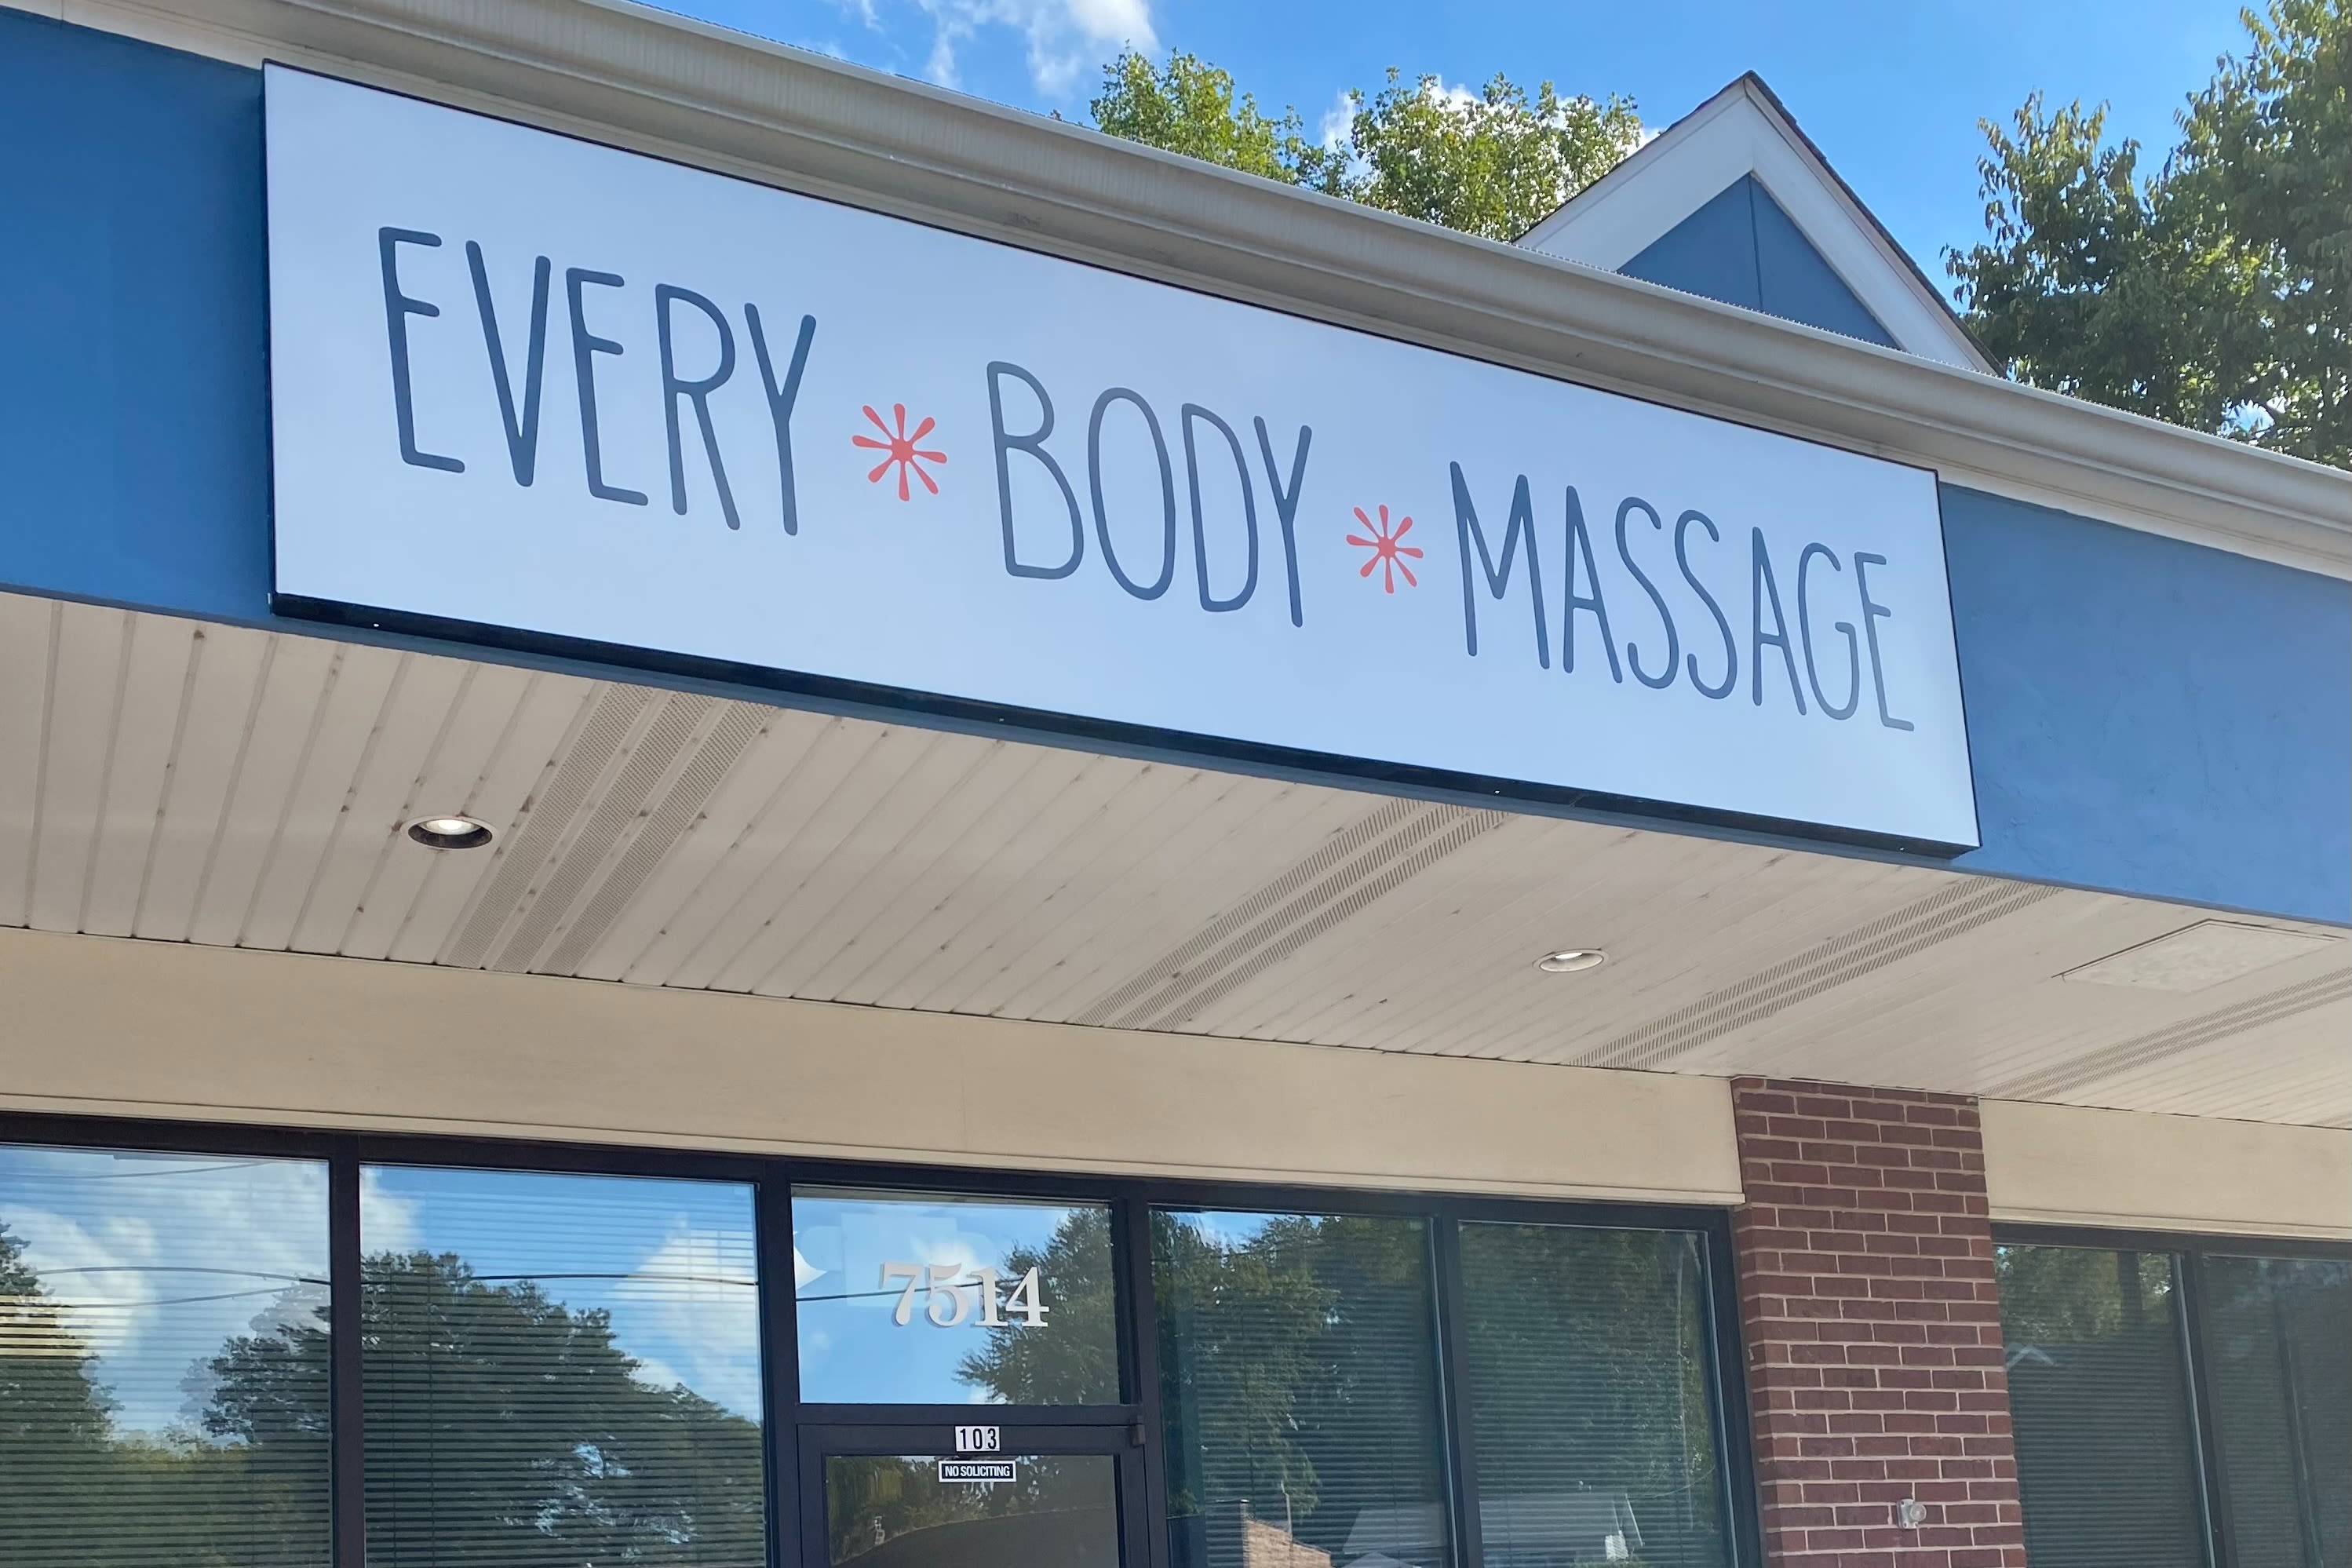 Every Body Massage Shrewsbury Read Reviews And Book Classes On Classpass